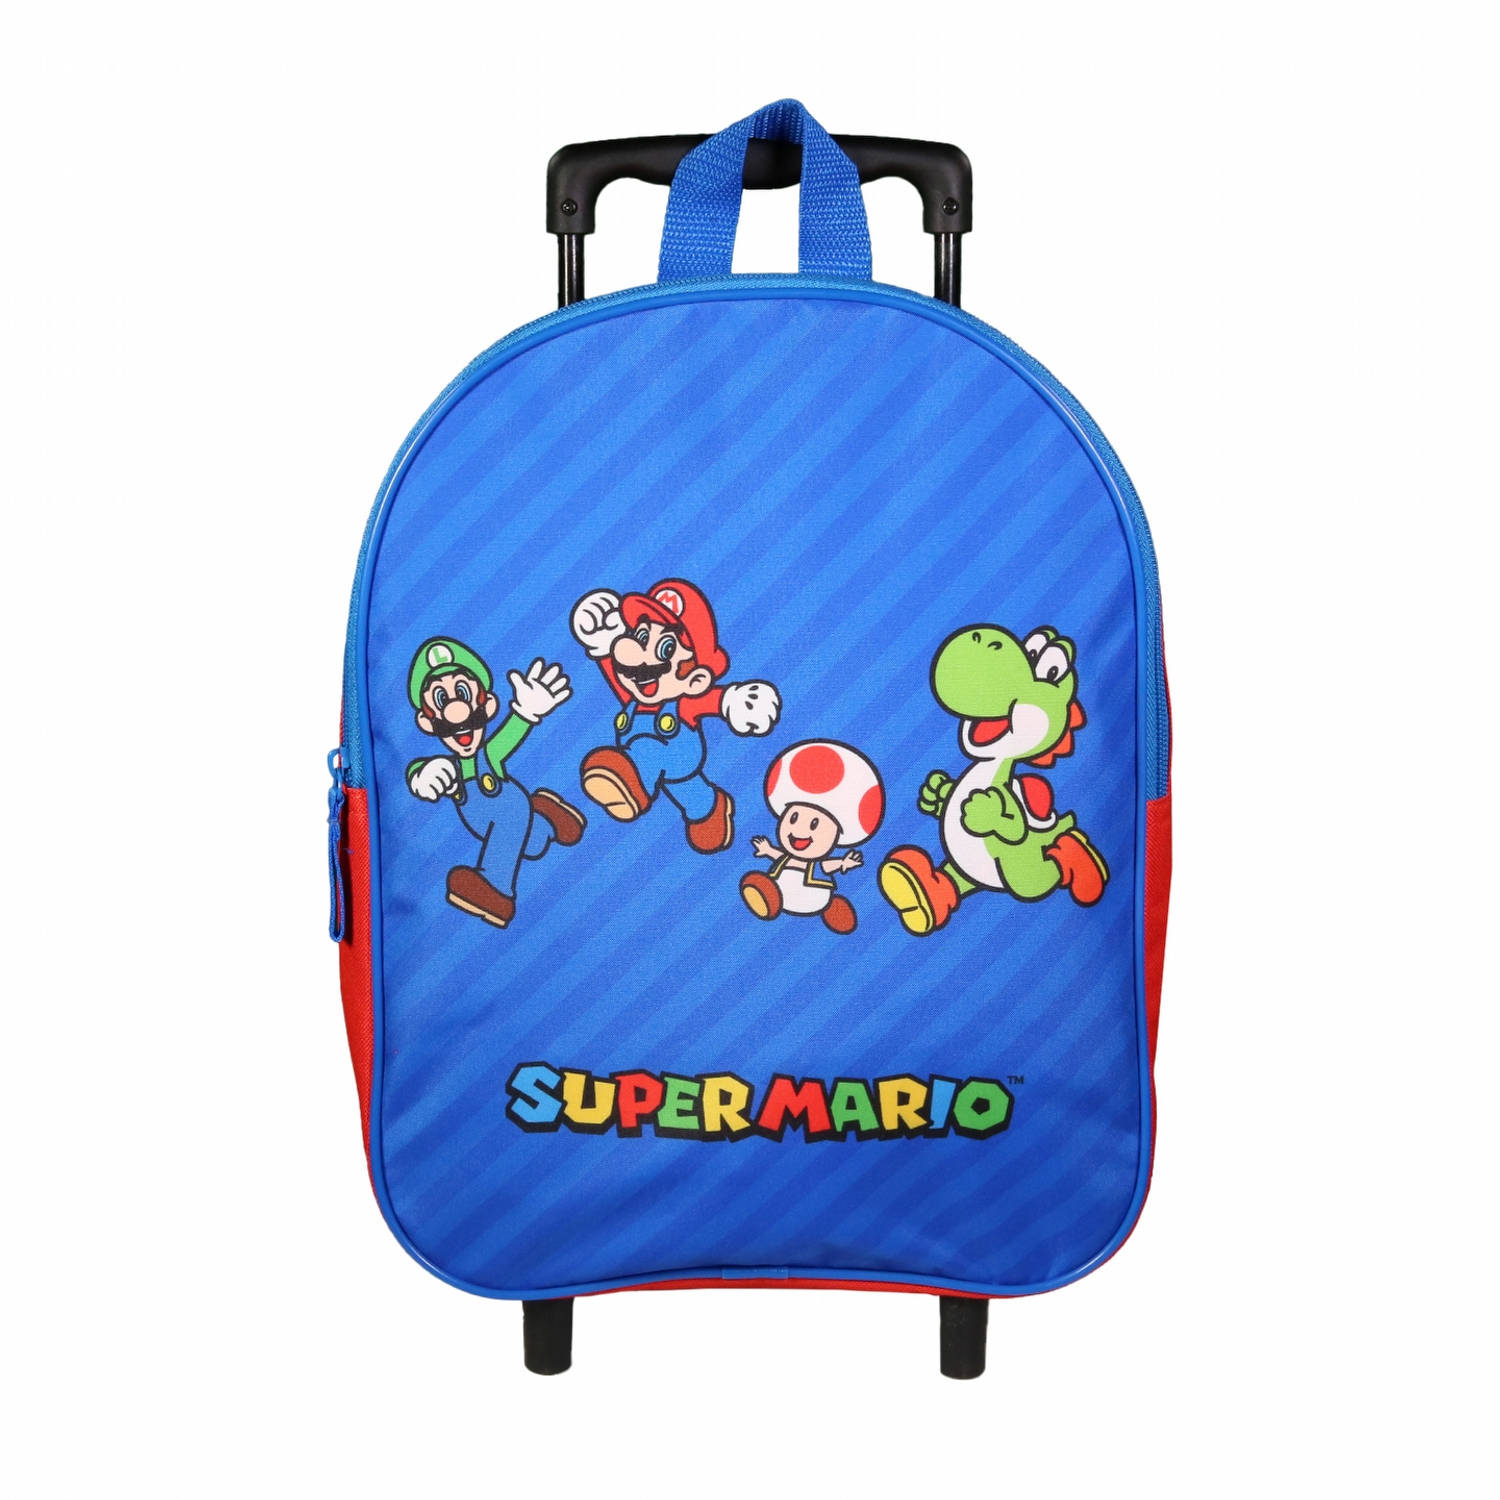 Super Mario peuter rugzak trolley